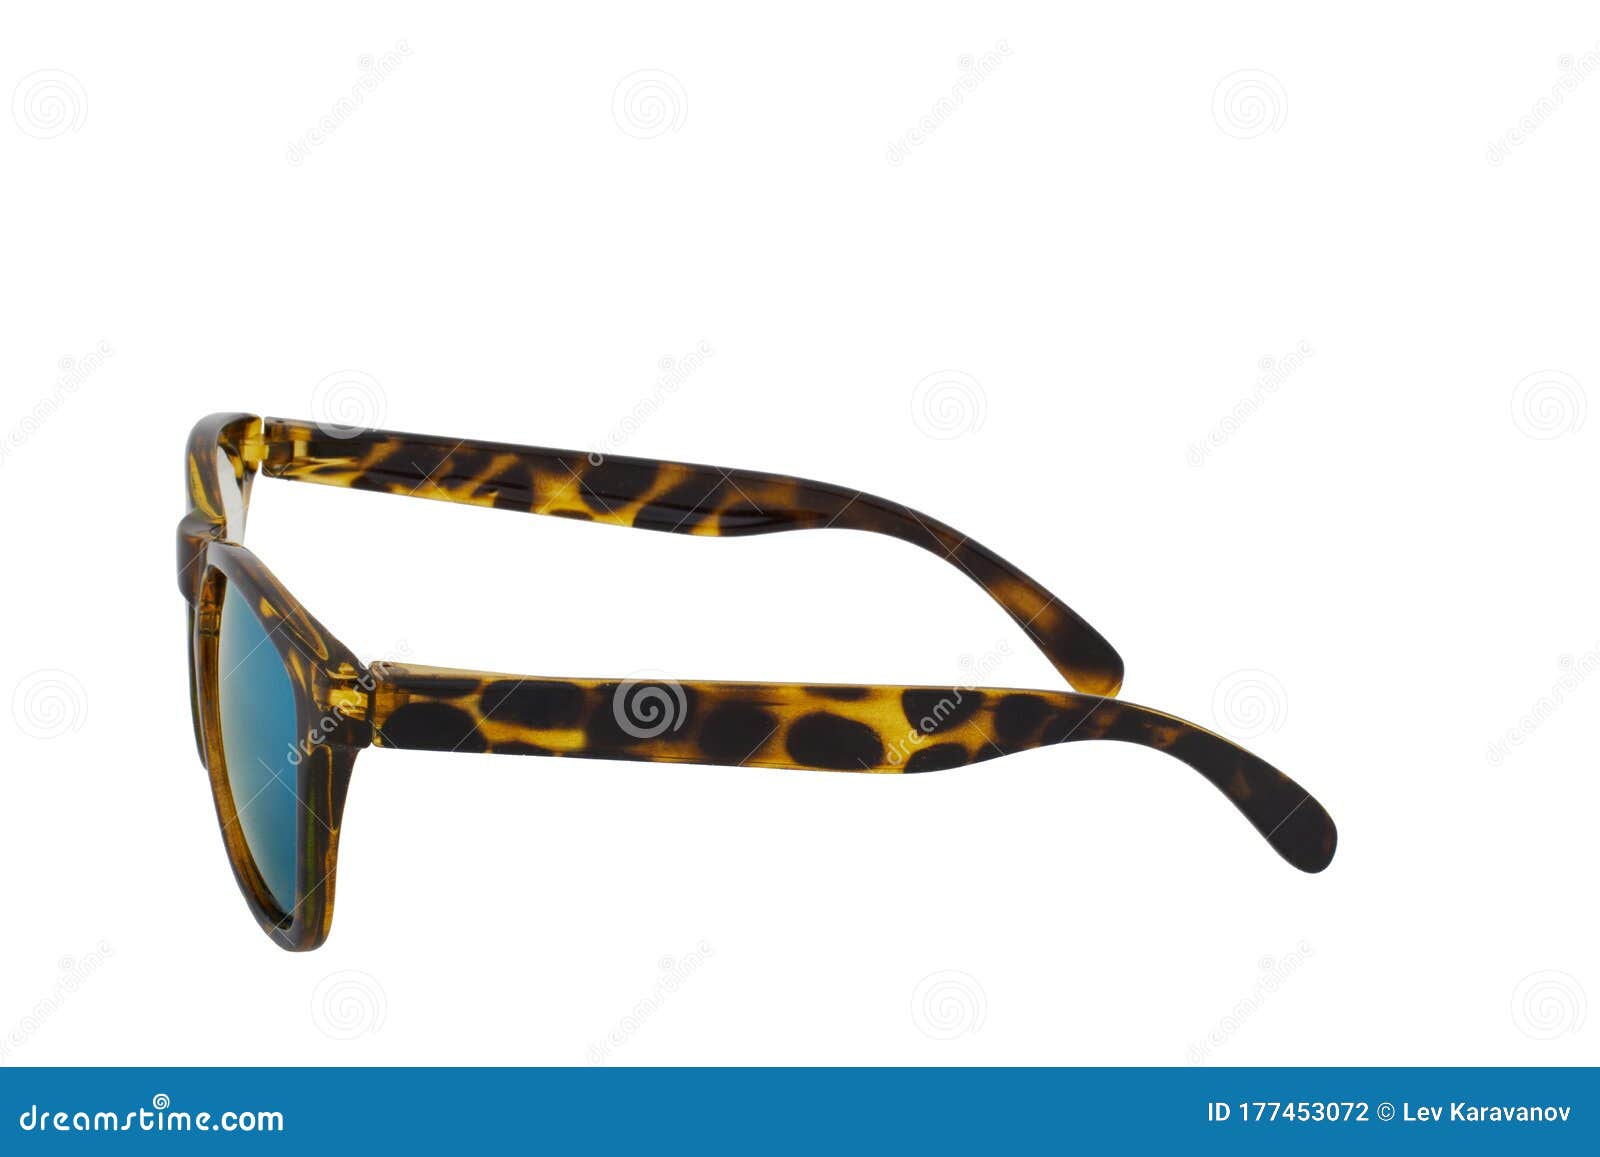 Custom Printed Neon-Brite Plastic Blues Brothers Sunglasses